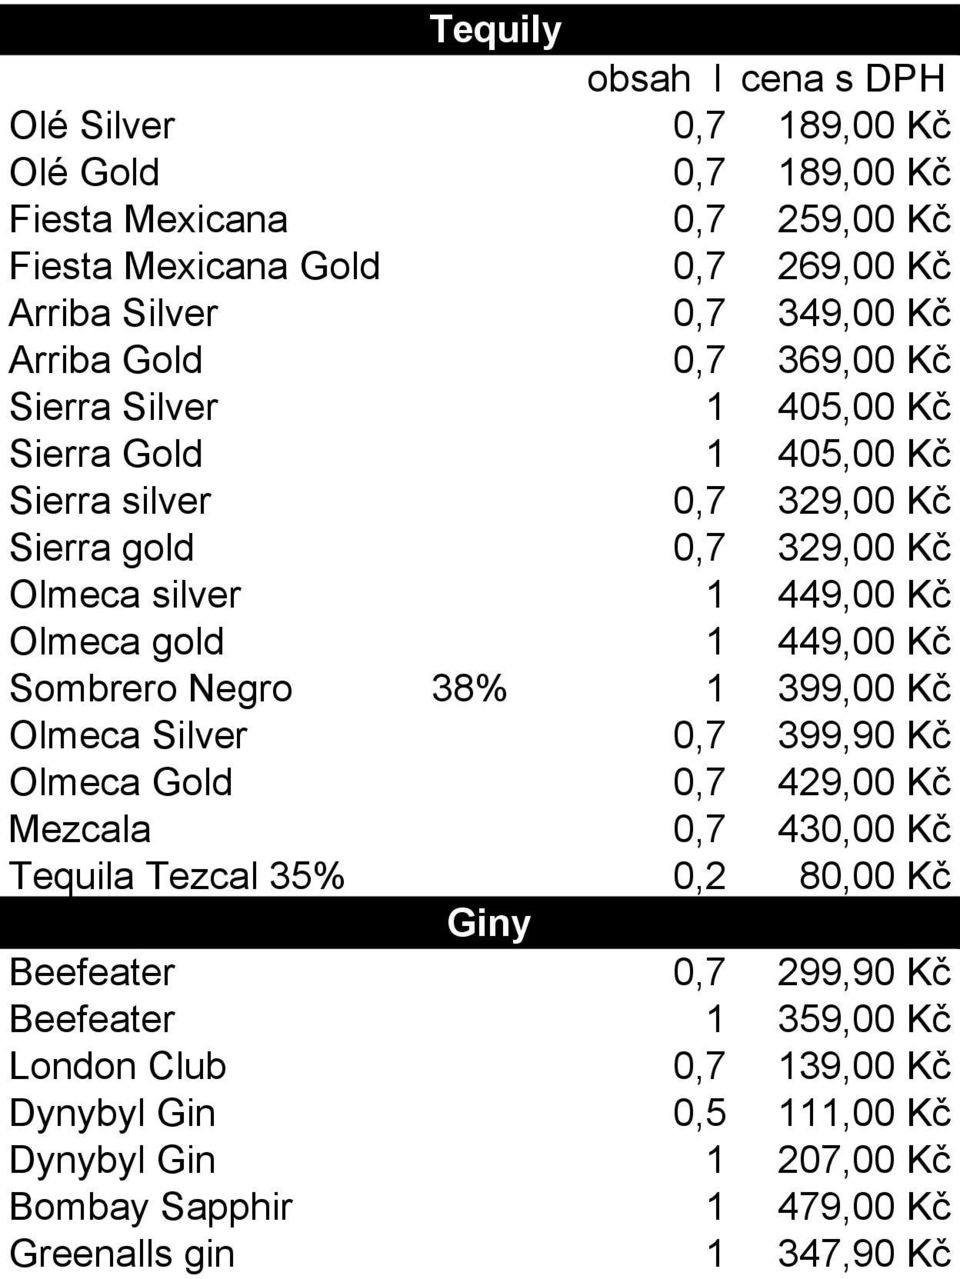 449,00 Kč Sombrero Negro 38% 1 399,00 Kč Olmeca Silver 0,7 399,90 Kč Olmeca Gold 0,7 429,00 Kč Mezcala 0,7 430,00 Kč Tequila Tezcal 35% 0,2 80,00 Kč Giny